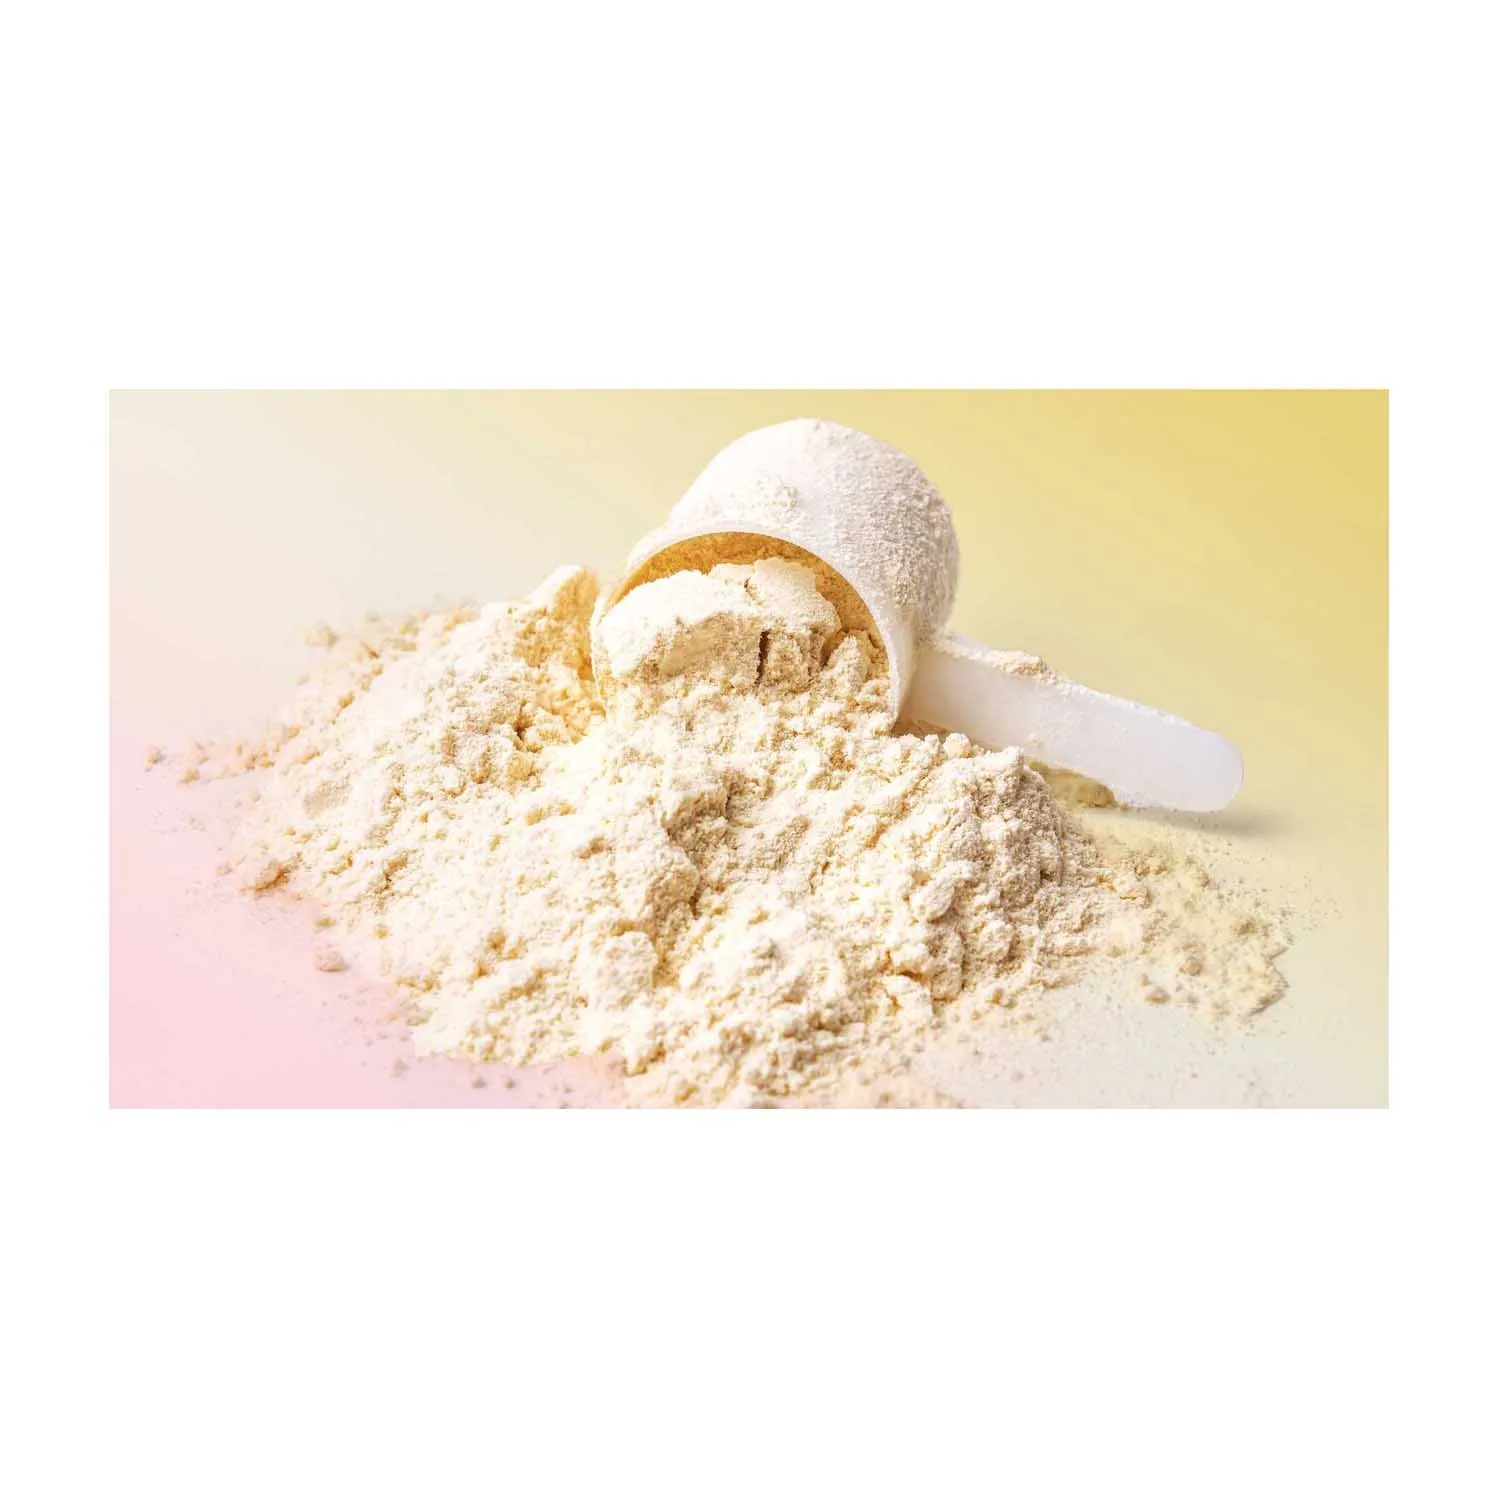 Creatine Monohydrate Powder Bulk HPLC Creatine Monohydrate Whey Protein Powder Creatine Powder